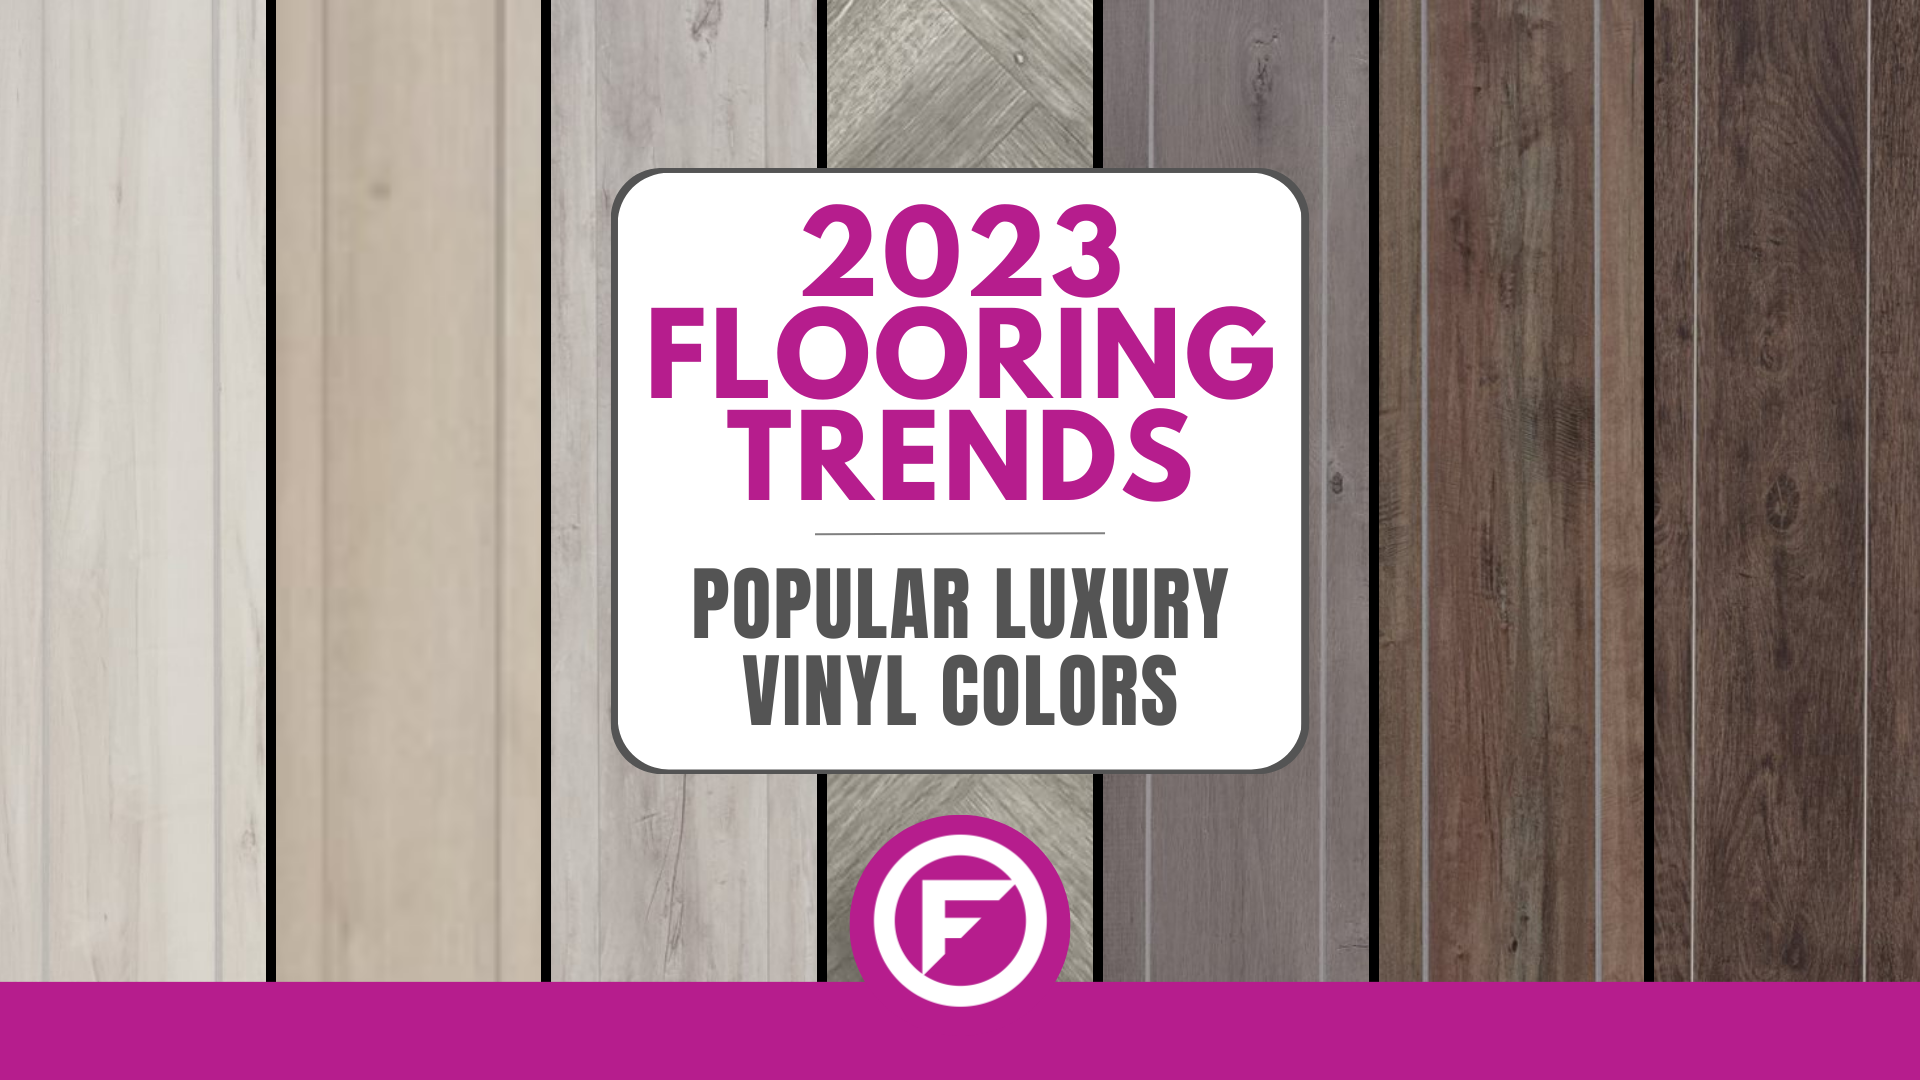 Floorily CoreLogic LVP Flooring Trends 2023 Popular Luxury Vinyl Colors